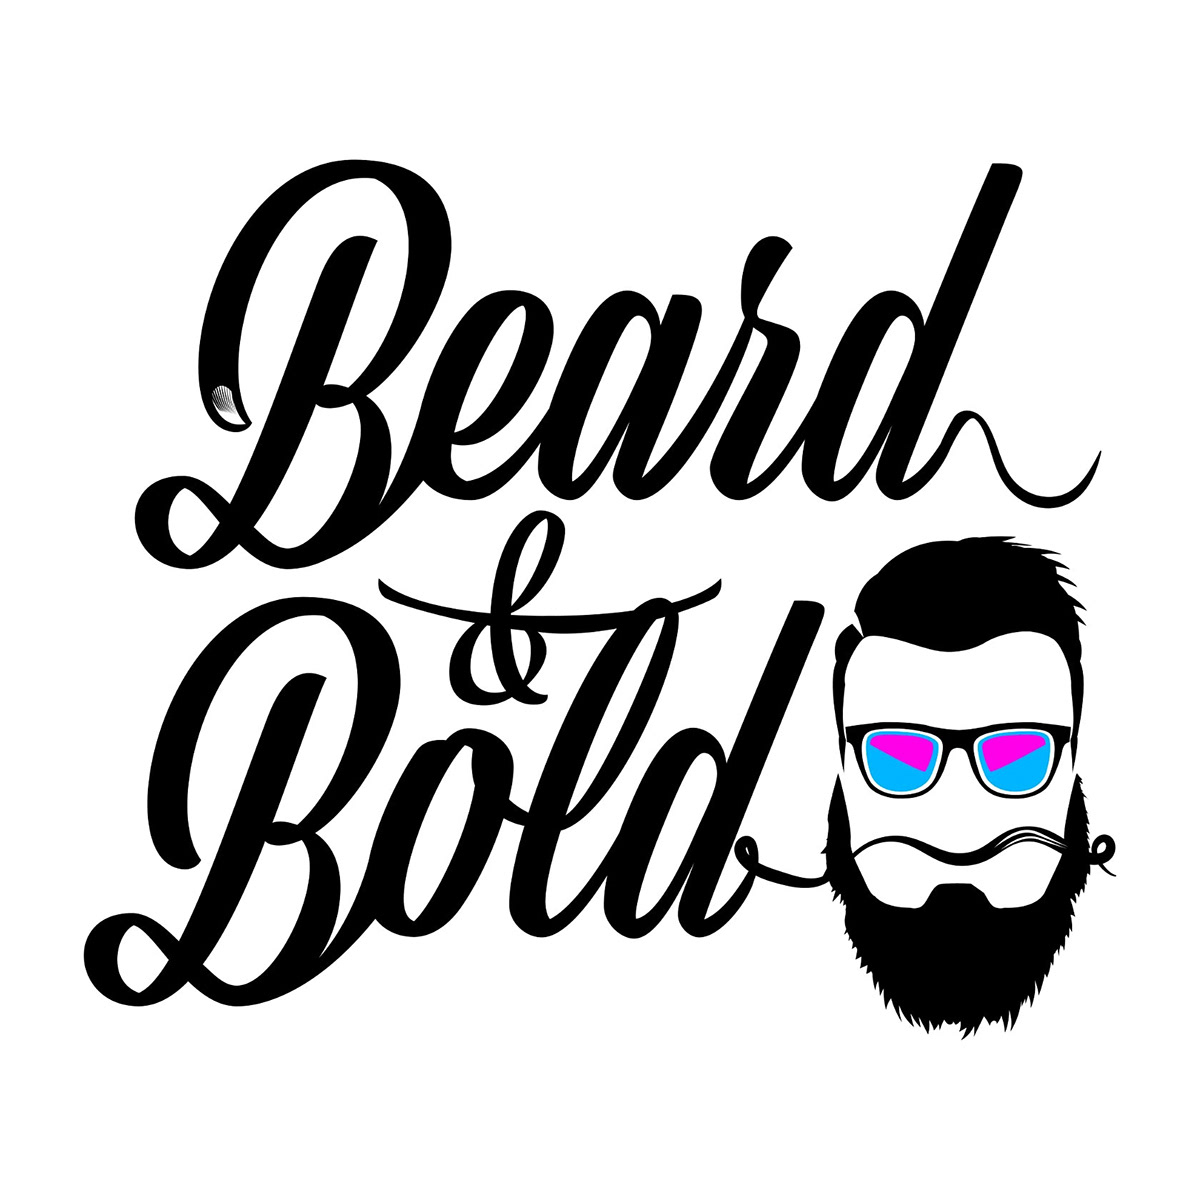 Beard & Bold on Behance